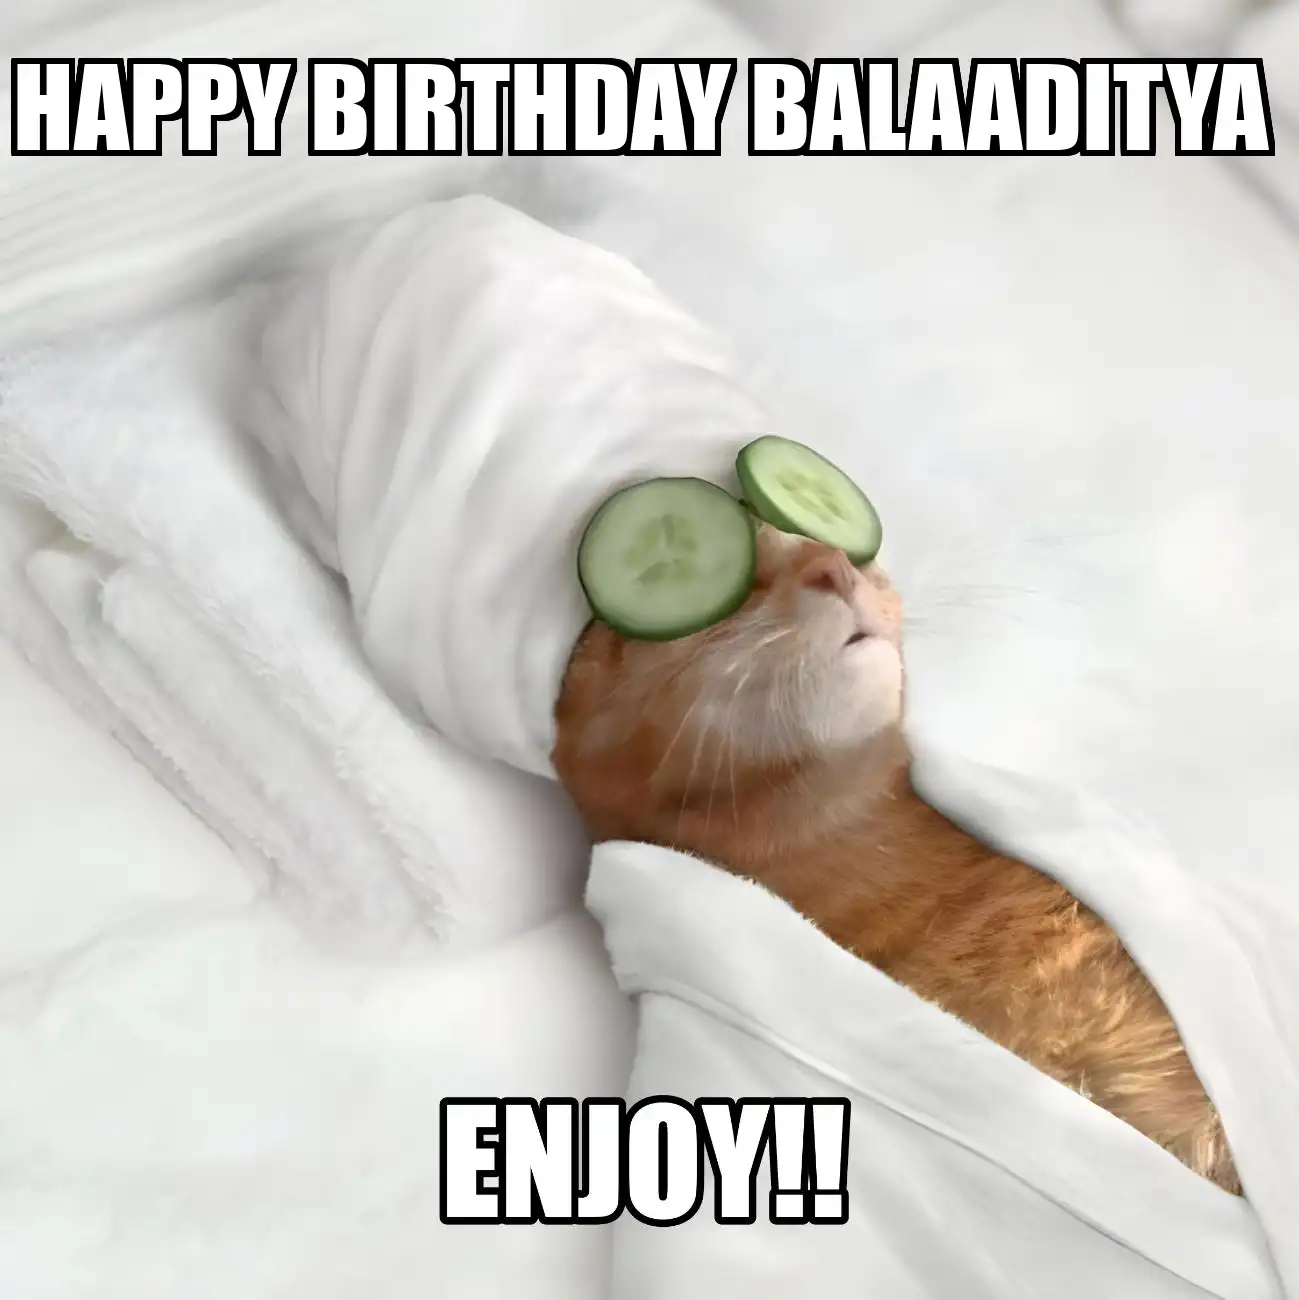 Happy Birthday Balaaditya Enjoy Cat Meme